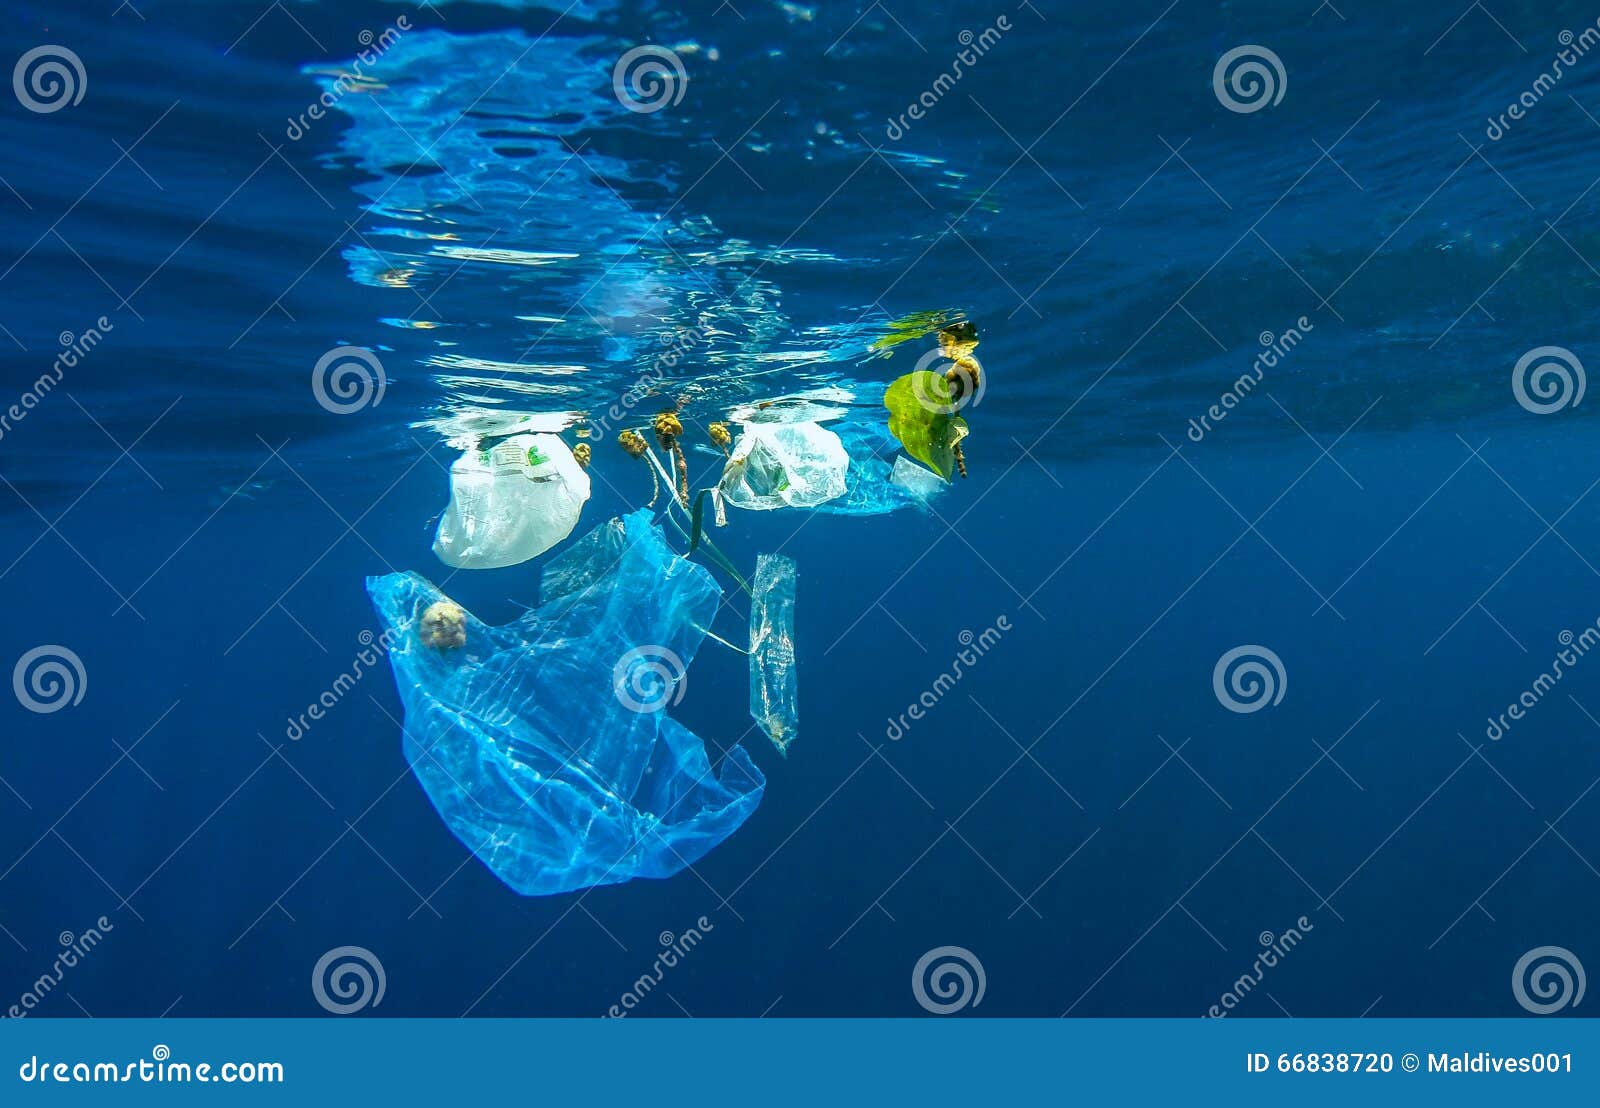 discarded plastic in ocean